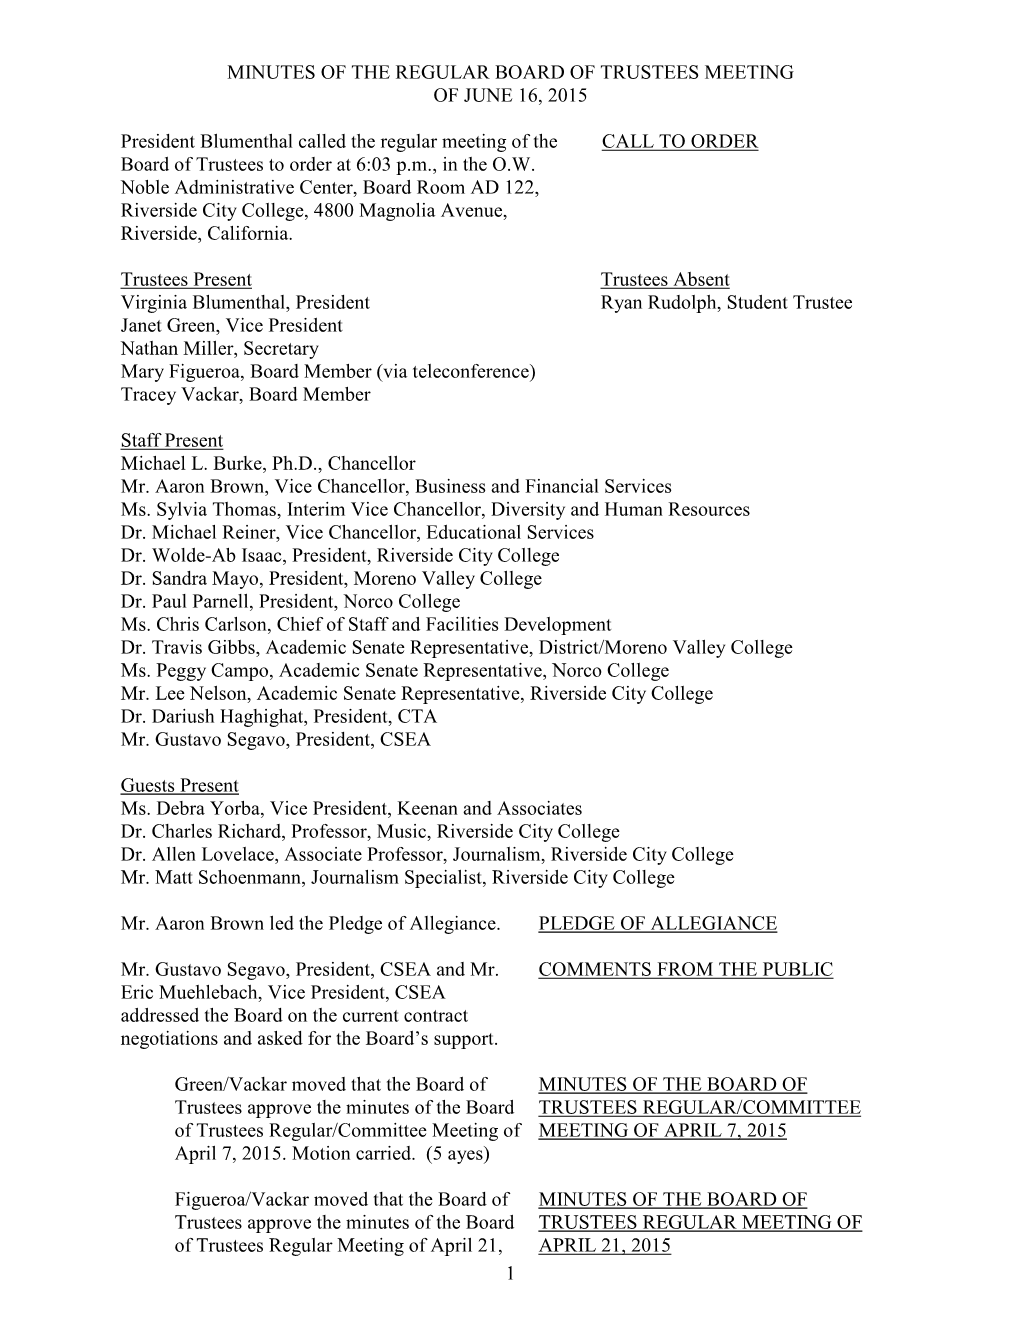 Minutes of the Regular Board of Trustees Meeting of June 16, 2015